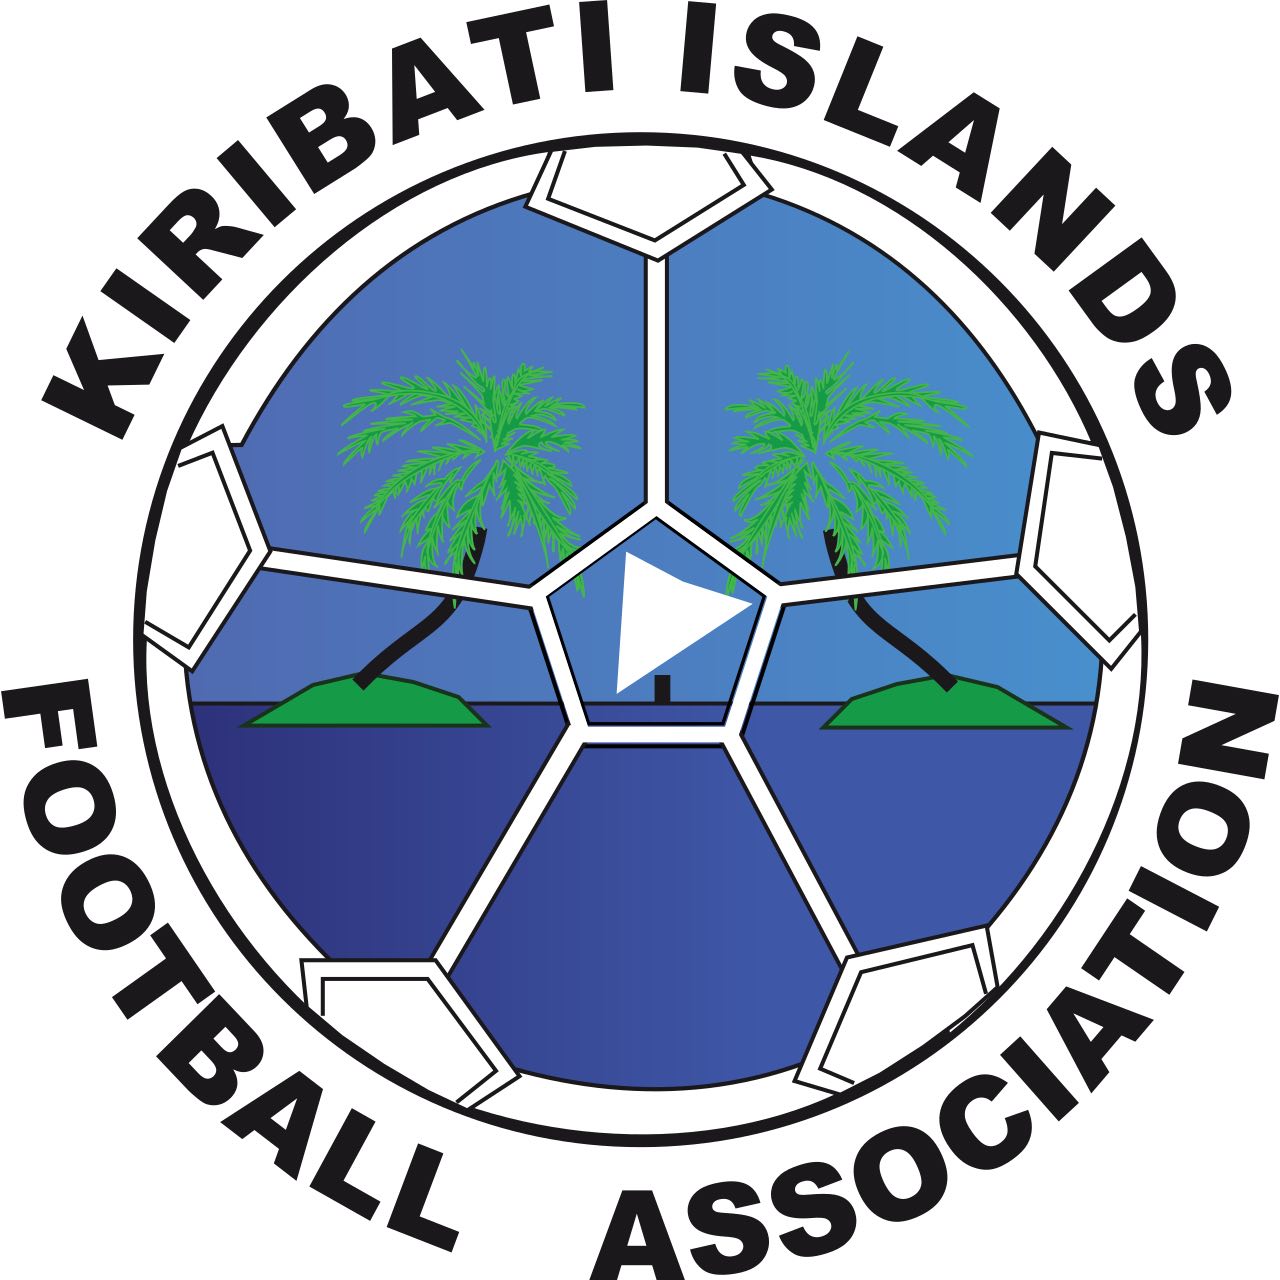 Football in Kiribati